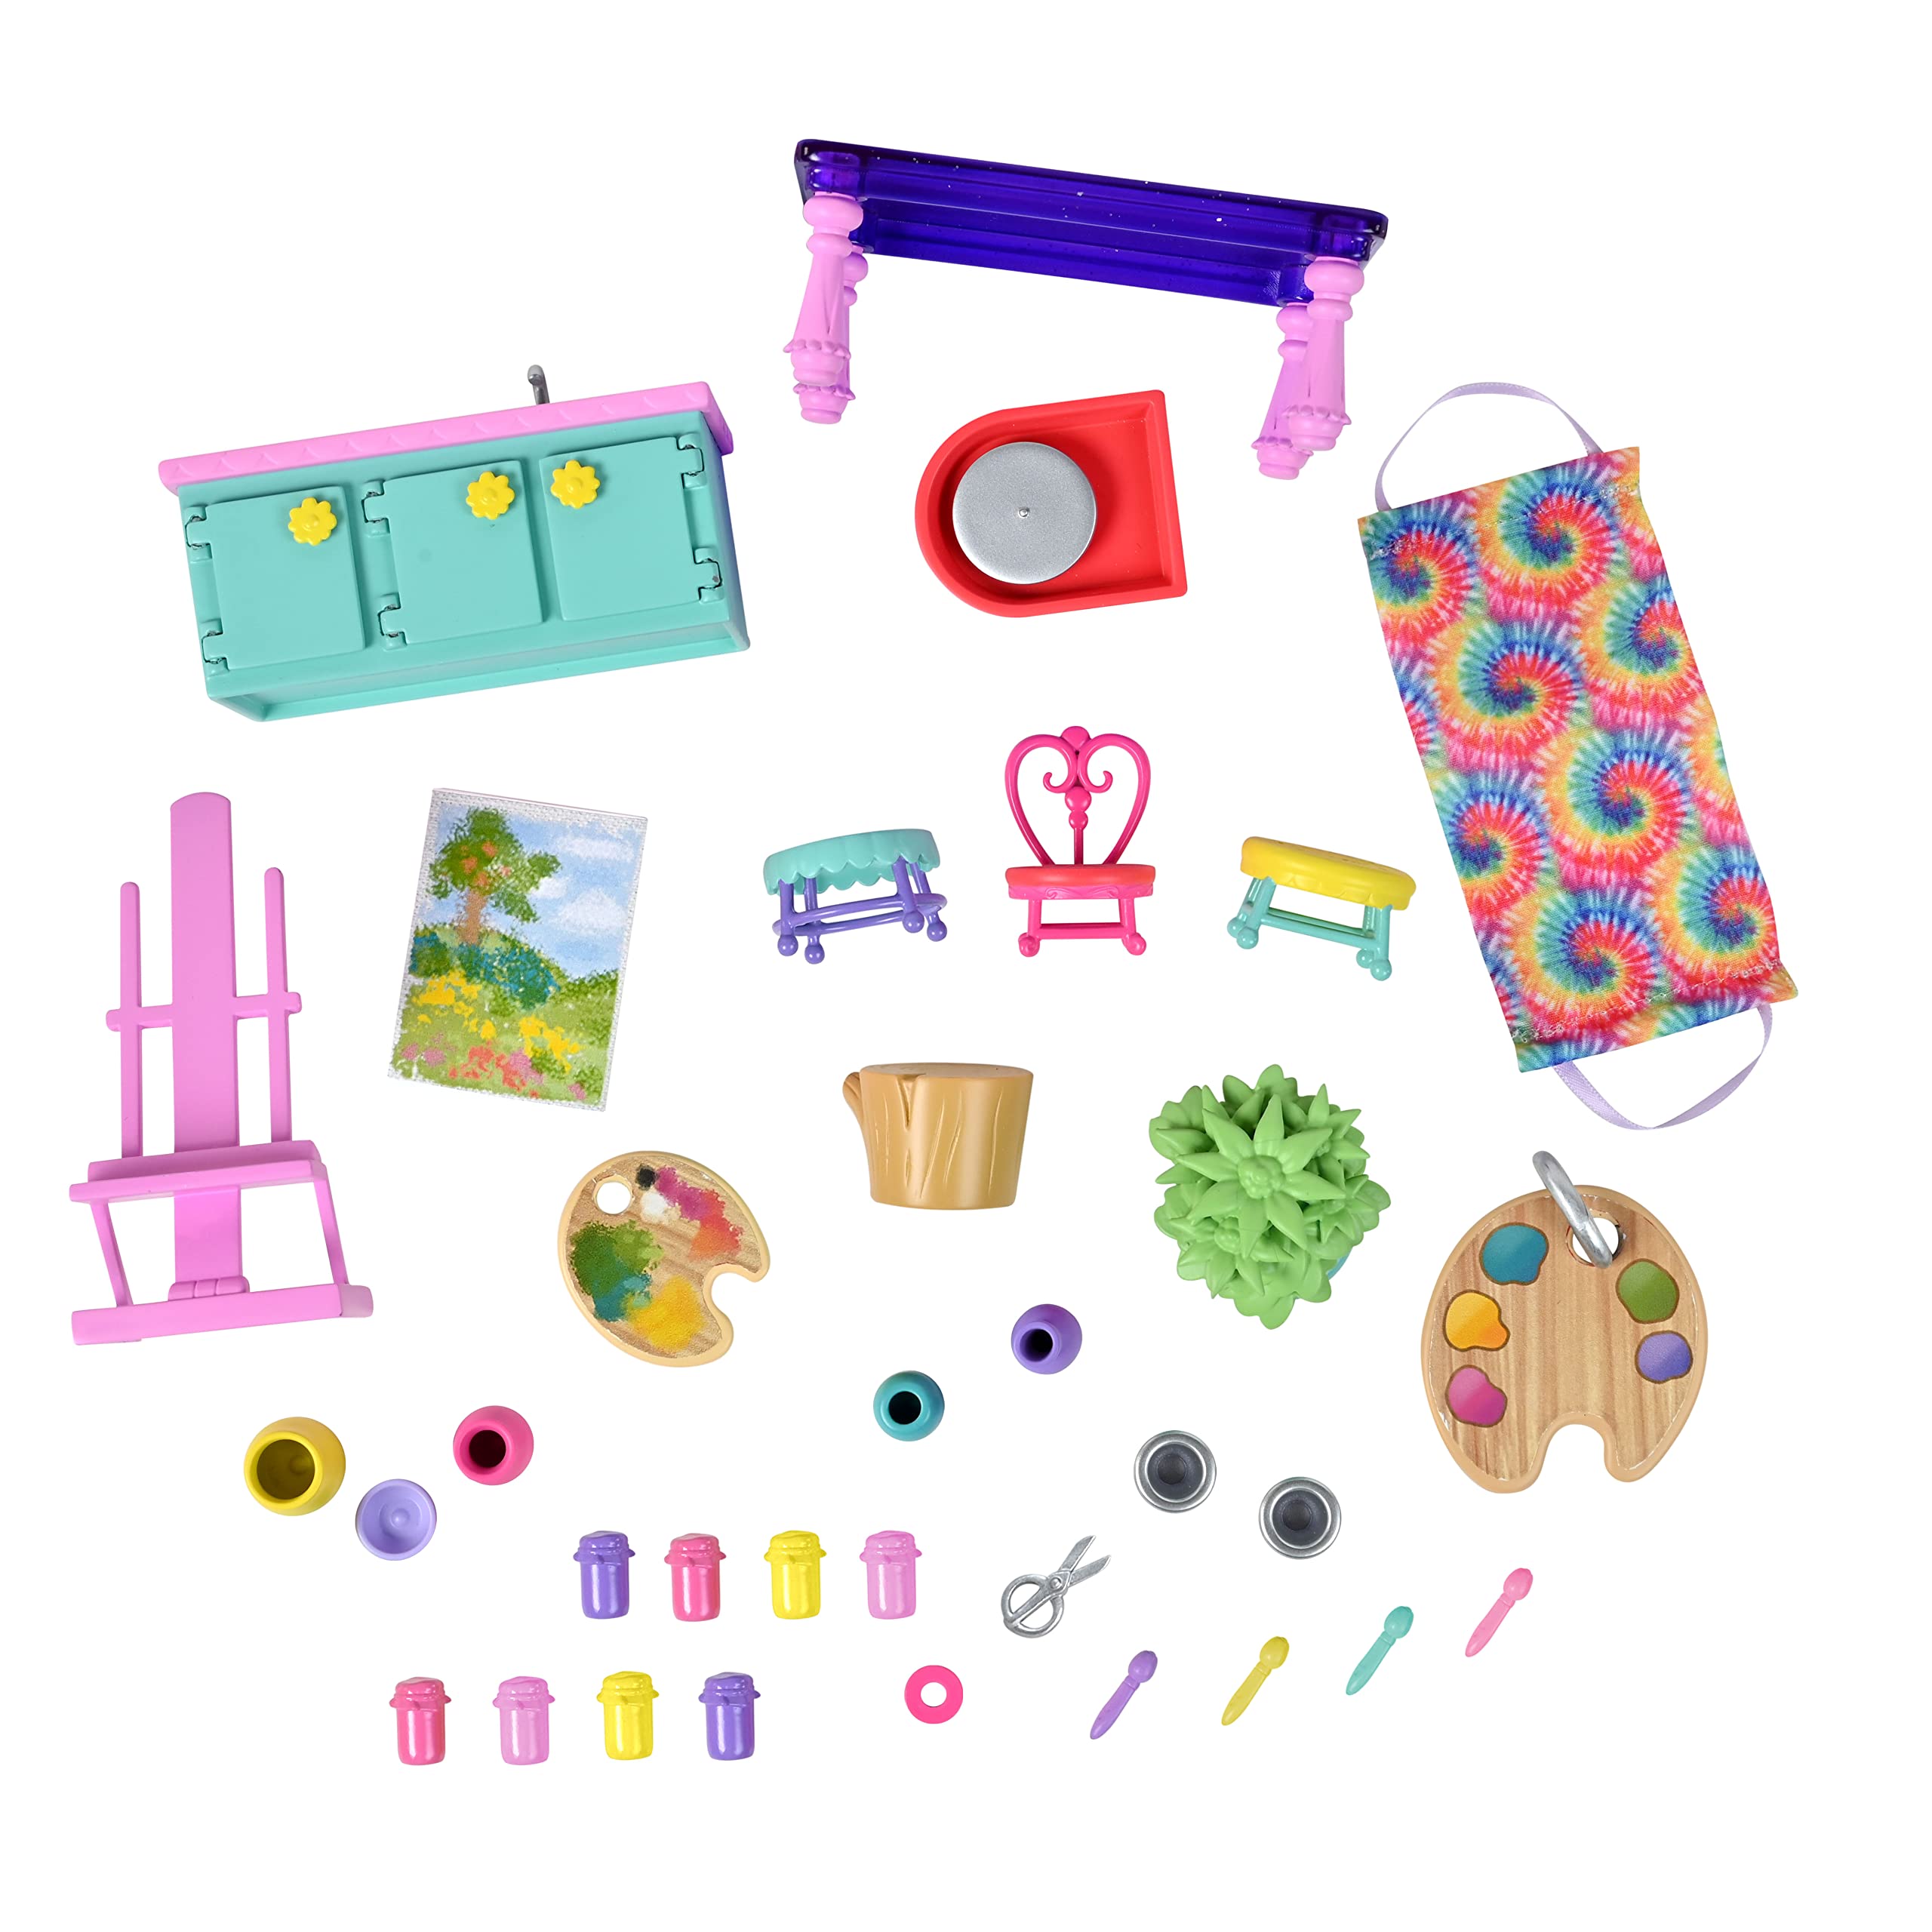 Sunny Days Entertainment Honey Bee Acres Rainbow Ridge Sunburst Art Studio – 50 Furniture Accessories with Exclusive Unicorn Figure | Light Up Dollhouse Playset | Pink Pretend Play Toys for Kids